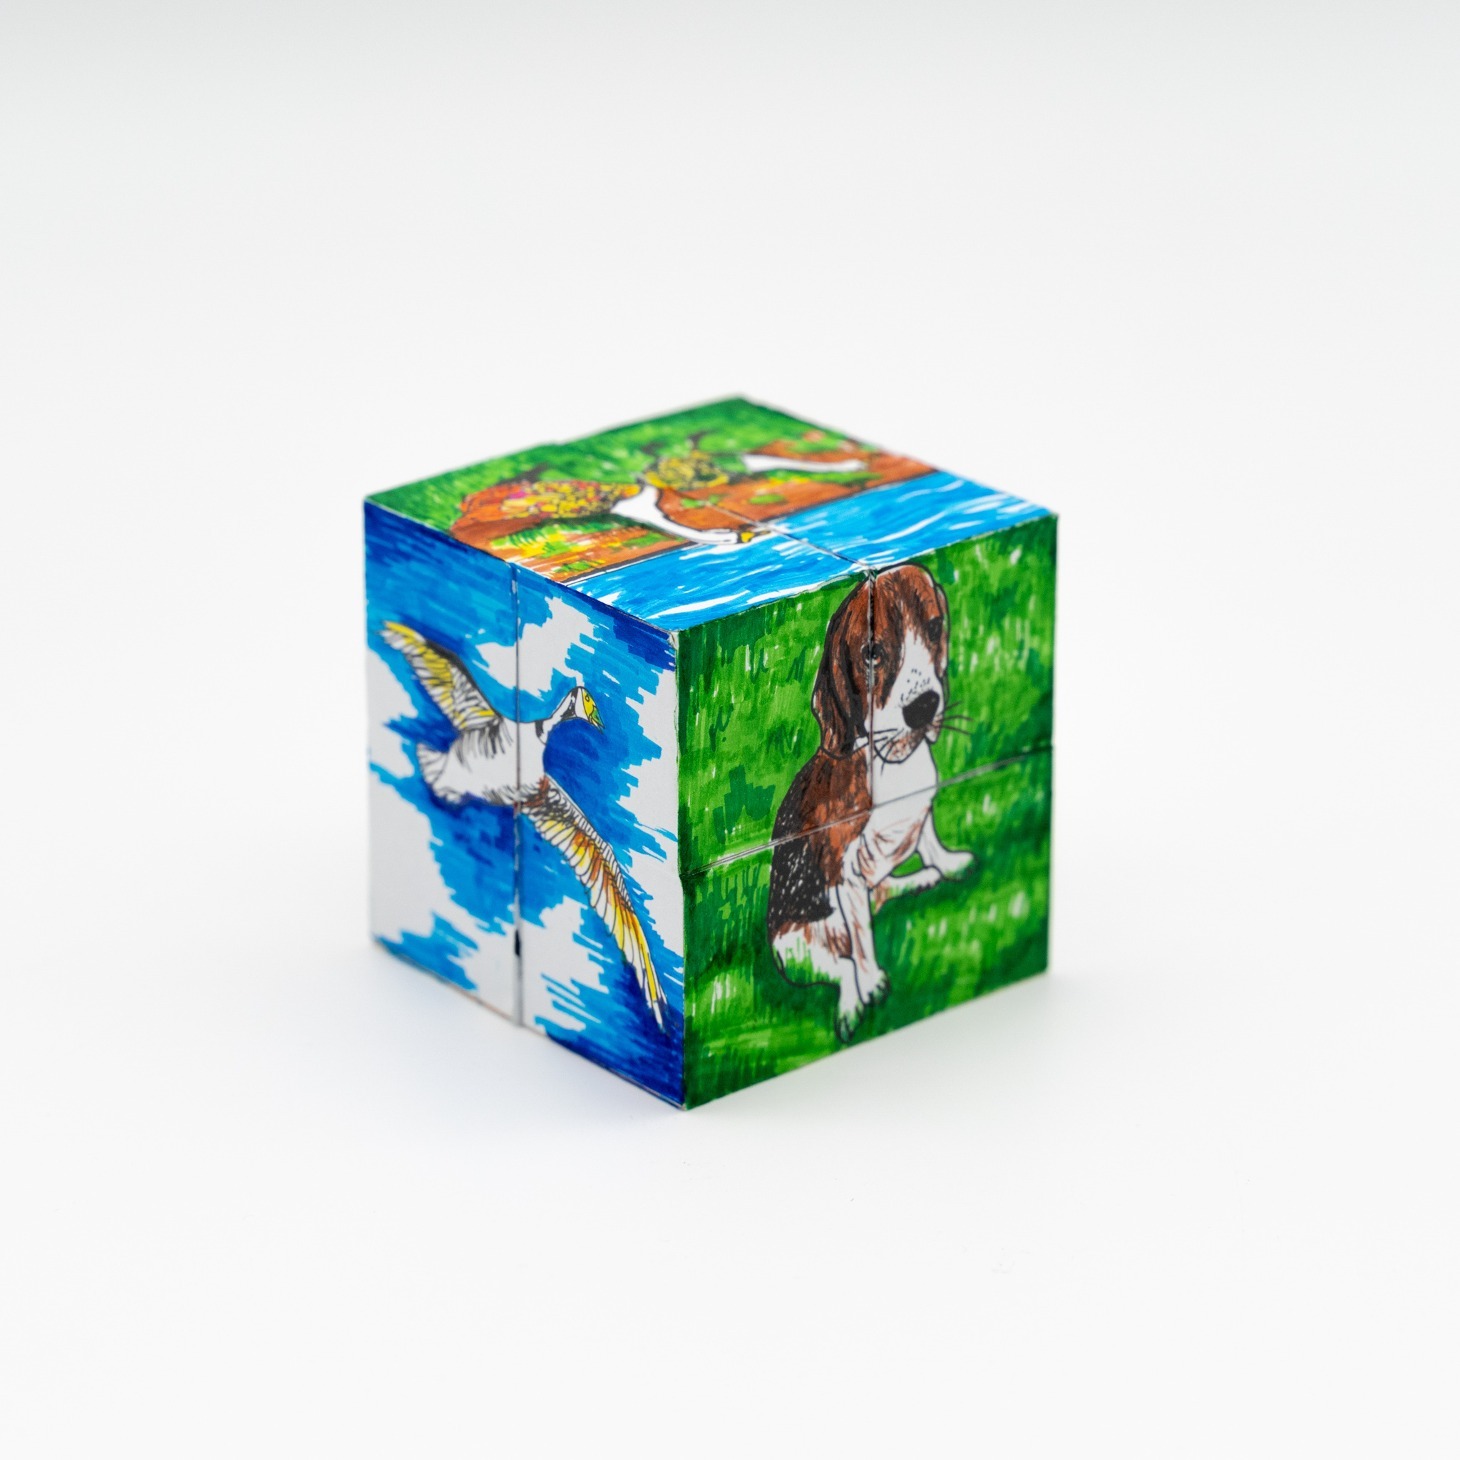 [MUSEUM IN HAND] DIY 퍼즐 큐브 키트 - 빙글빙글 동물 친구들  (이한나 작가)